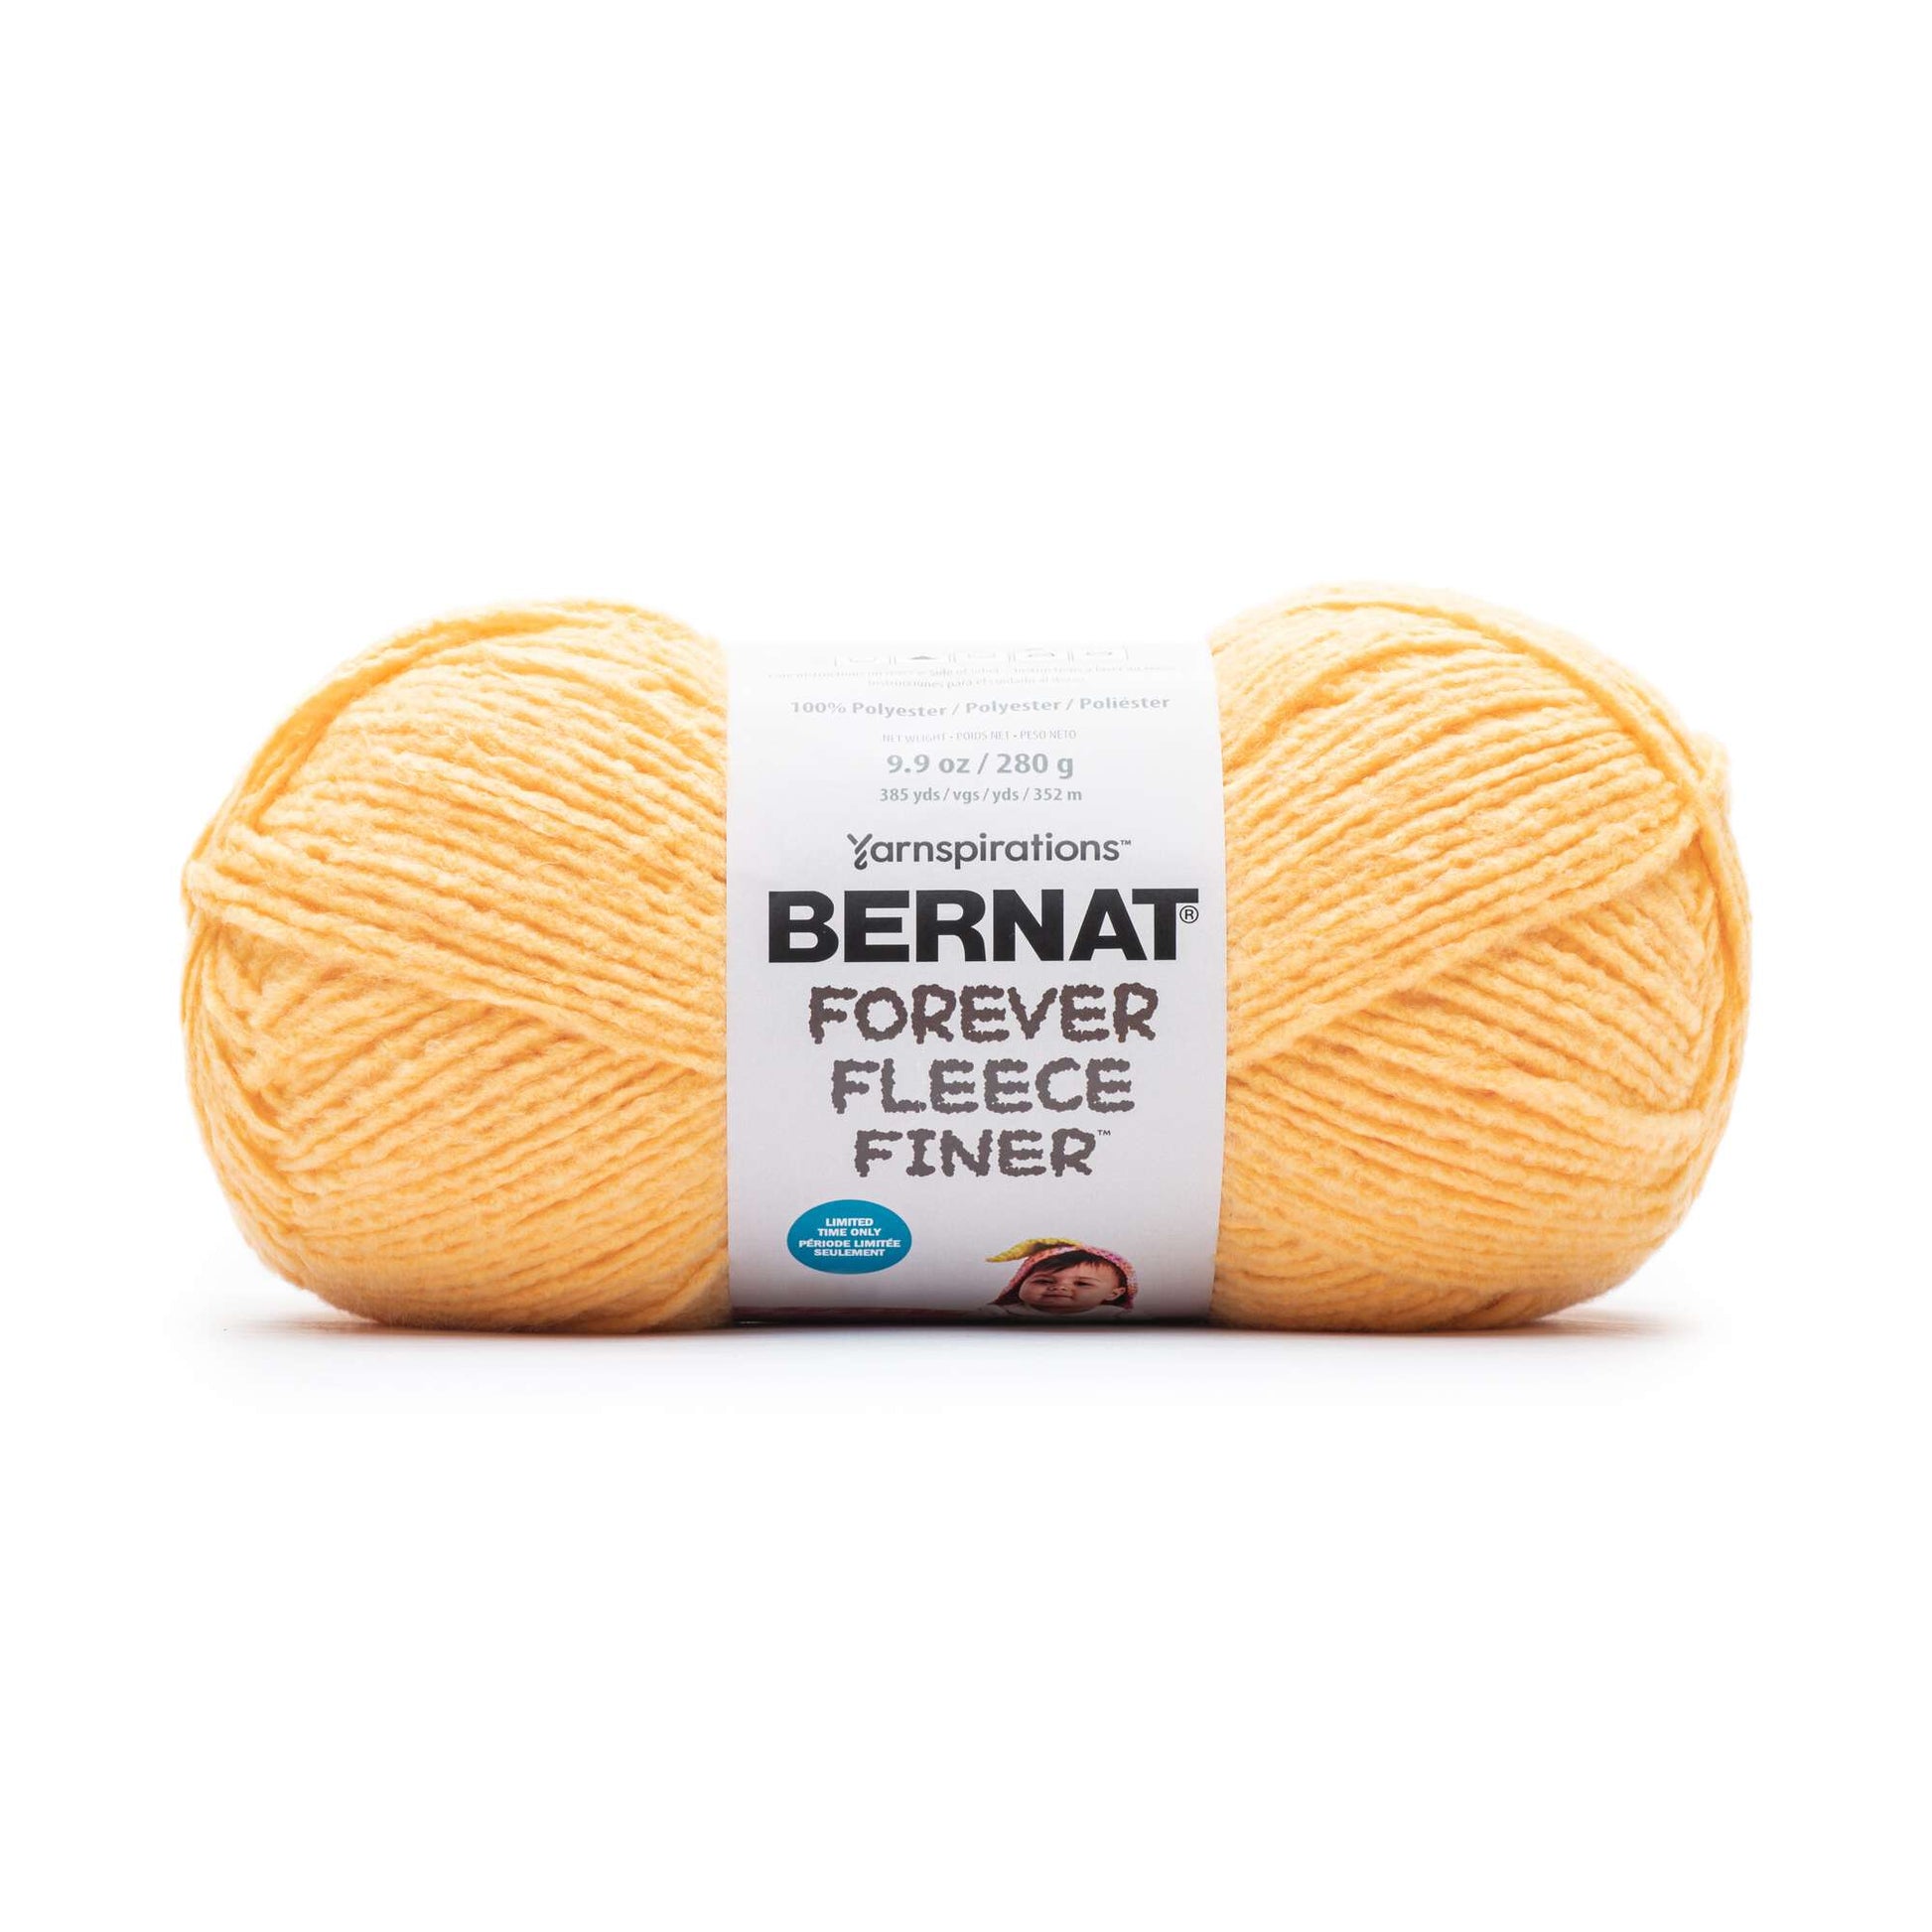 Bernat Forever Fleece Finer Yarn - Discontinued Shades My Sunshine